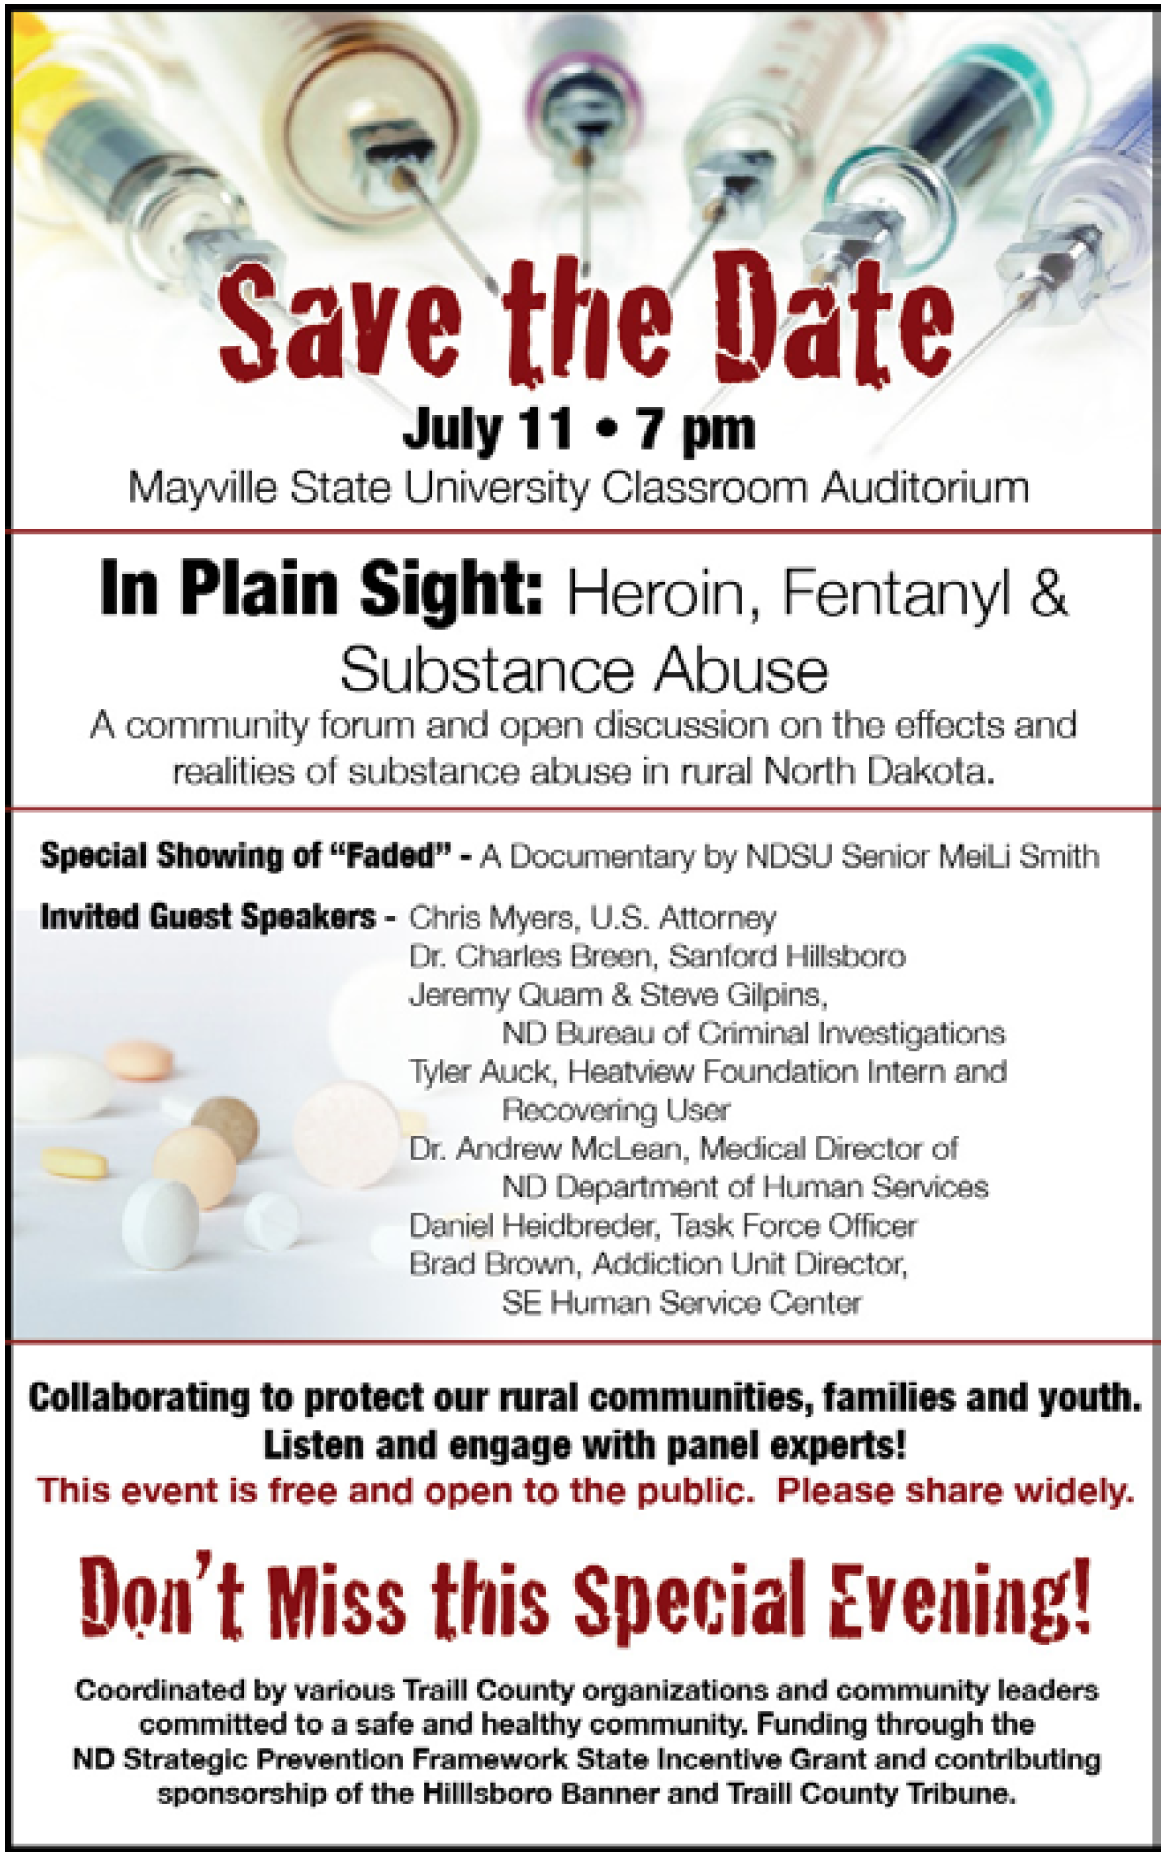 In Plain Sight: Heroin, Fentanyl & Substance Abuse @ Mayville State University Classroom Auditorium